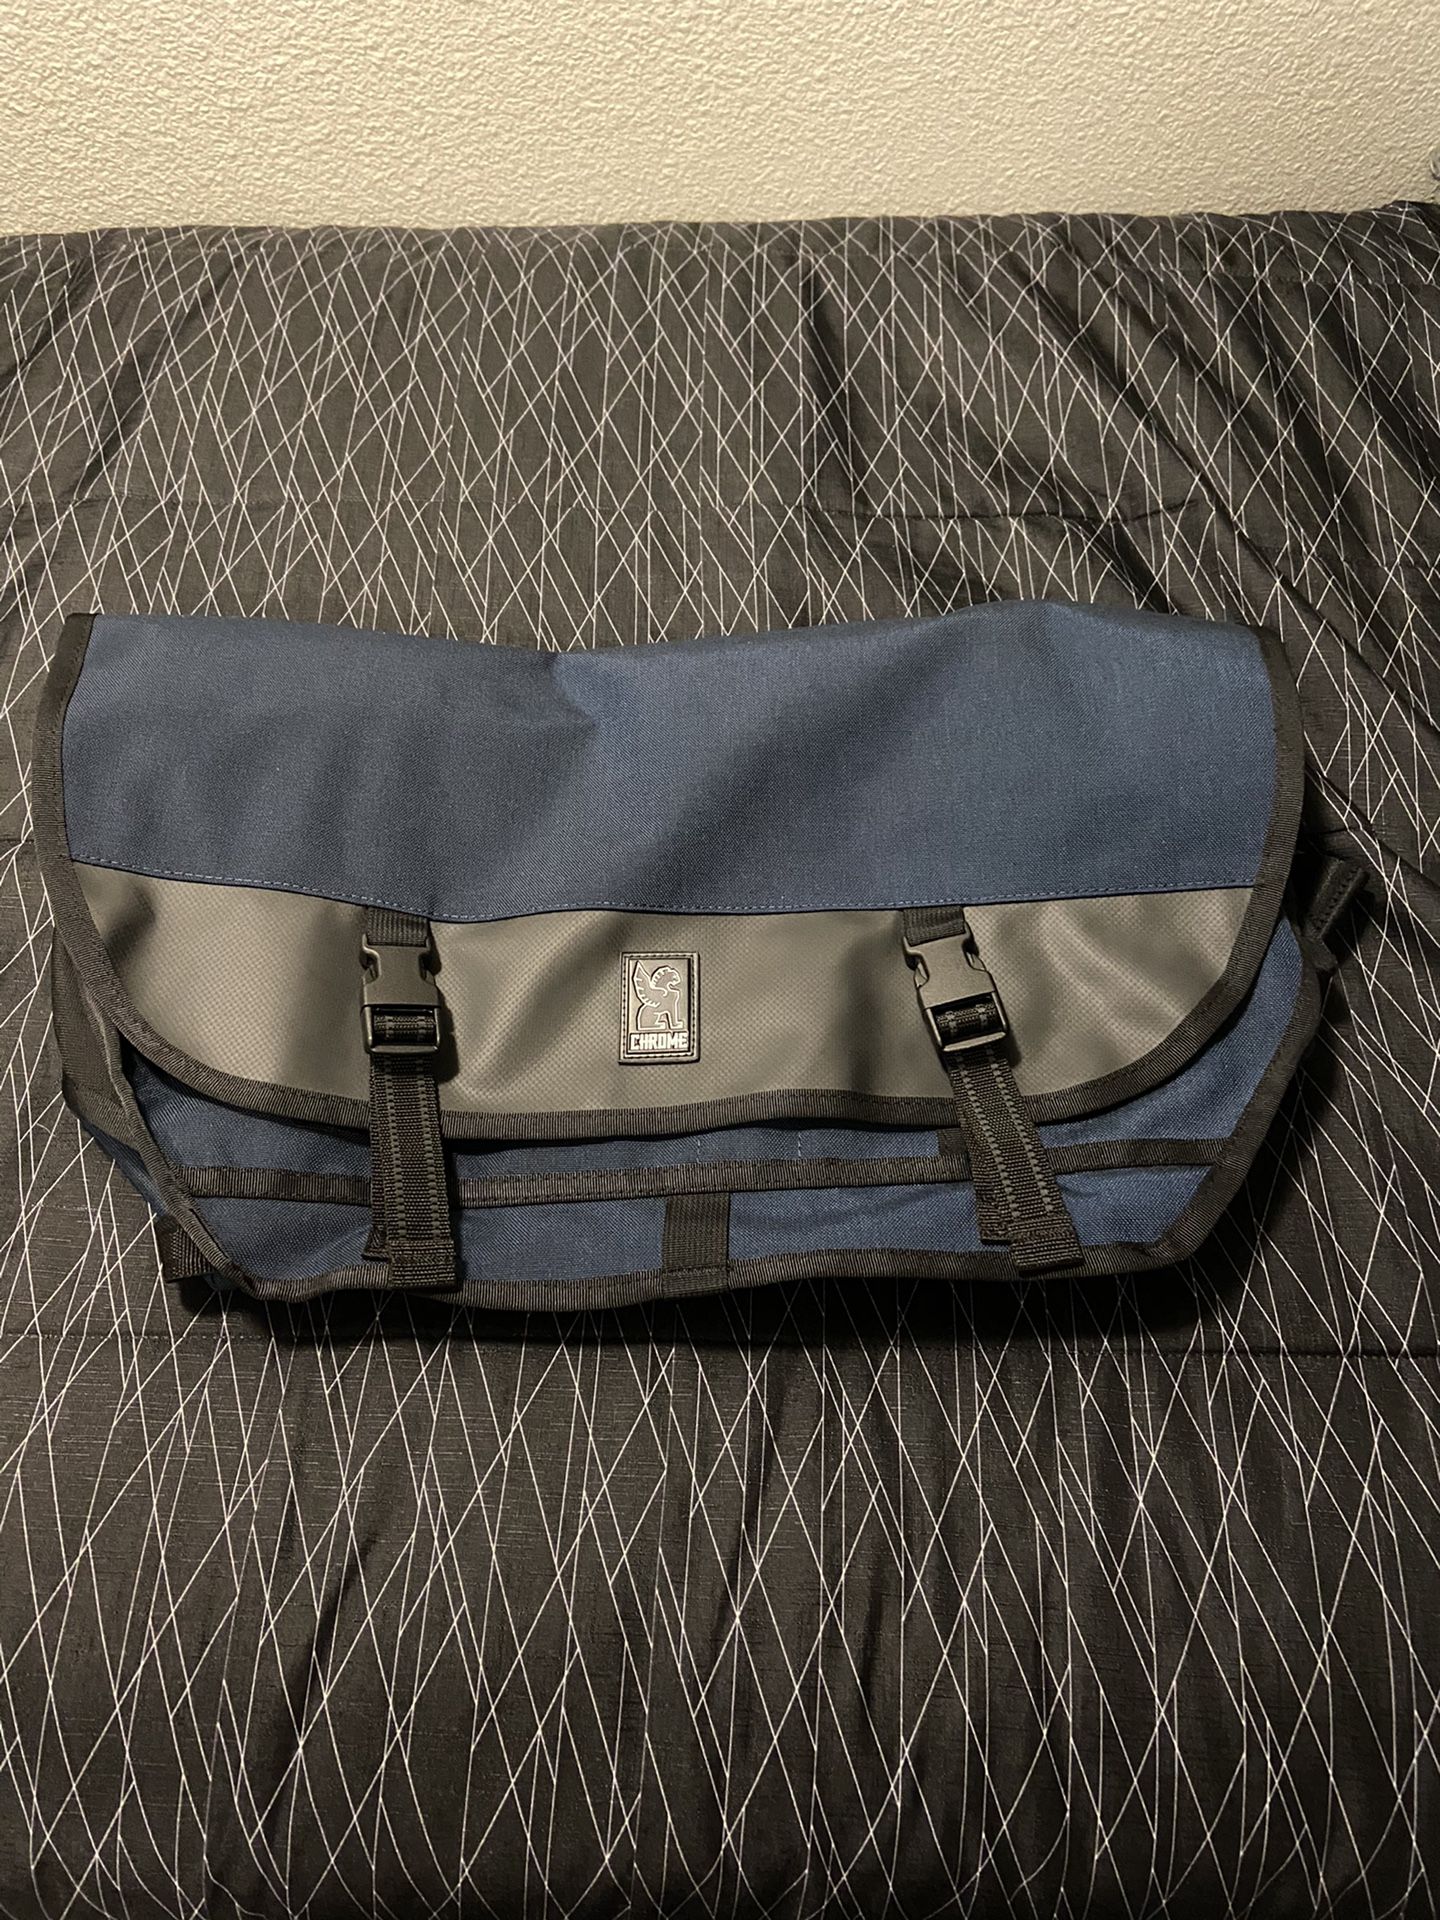 Chrome Navy Blue Messenger/Laptop Bag